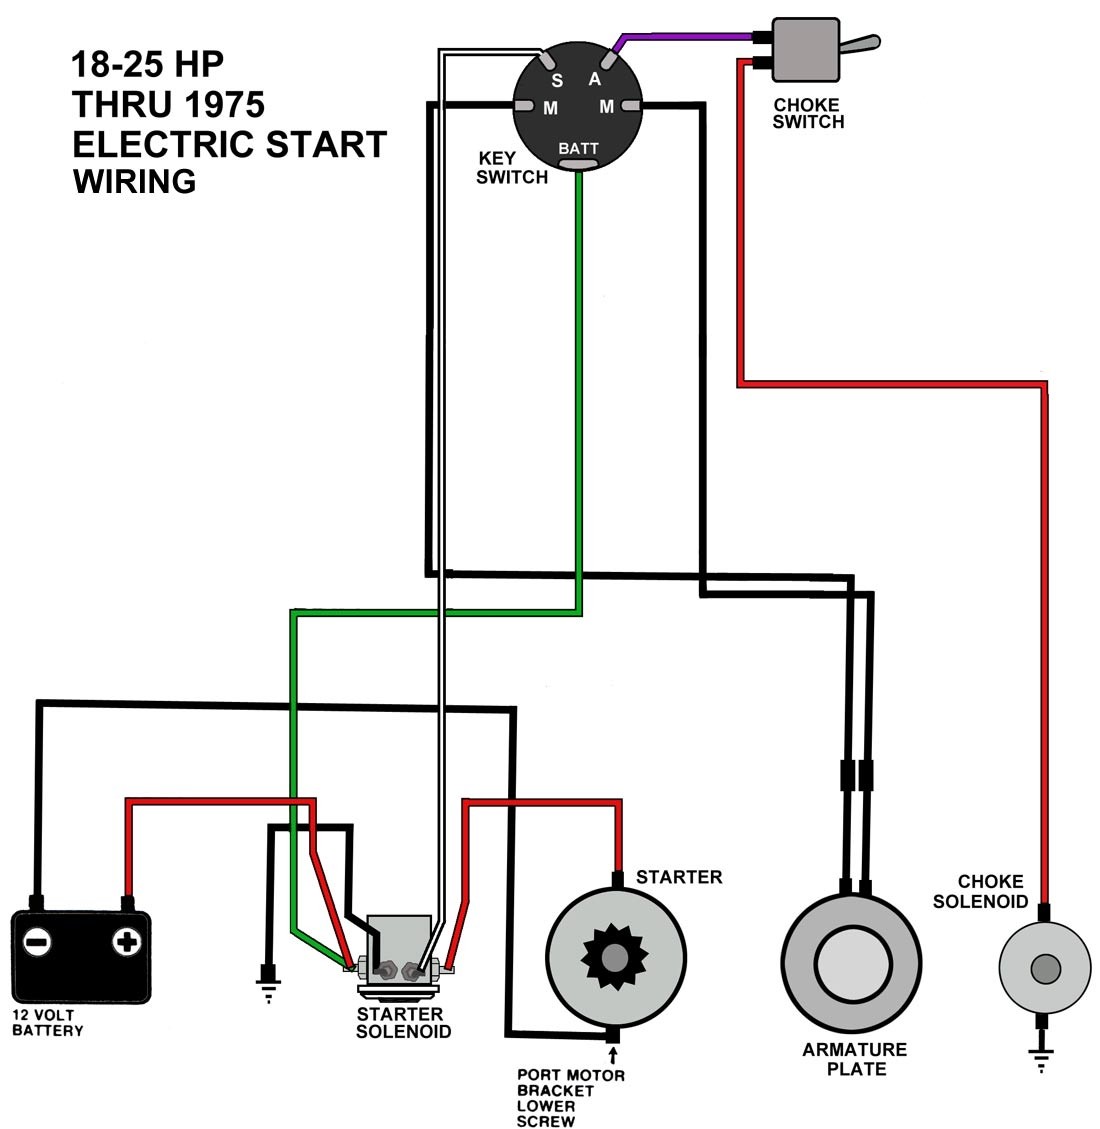 atv key switch wire color diagram schematics wiring diagrams u2022 rh seniorlivinguniversity co honda foreman key